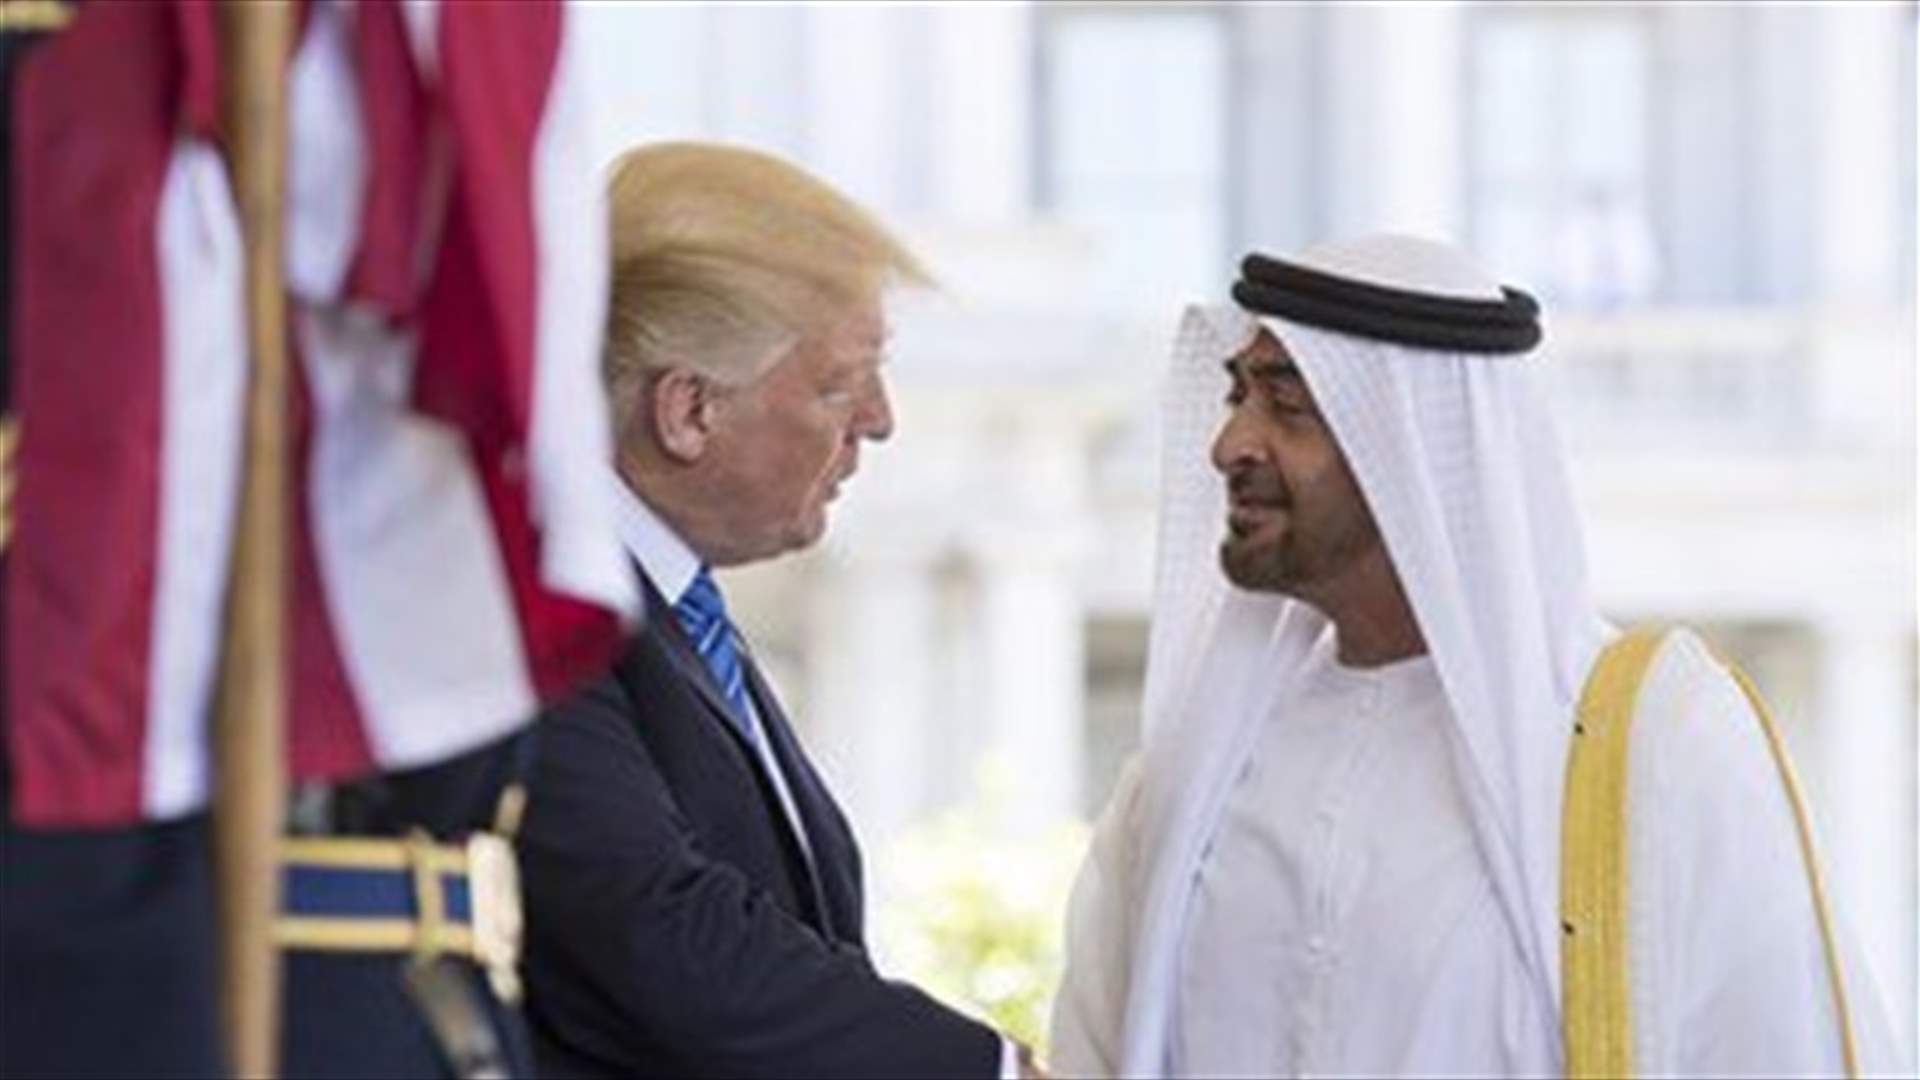 Trump spoke with Abu Dhabi crown prince on Thursday -White House